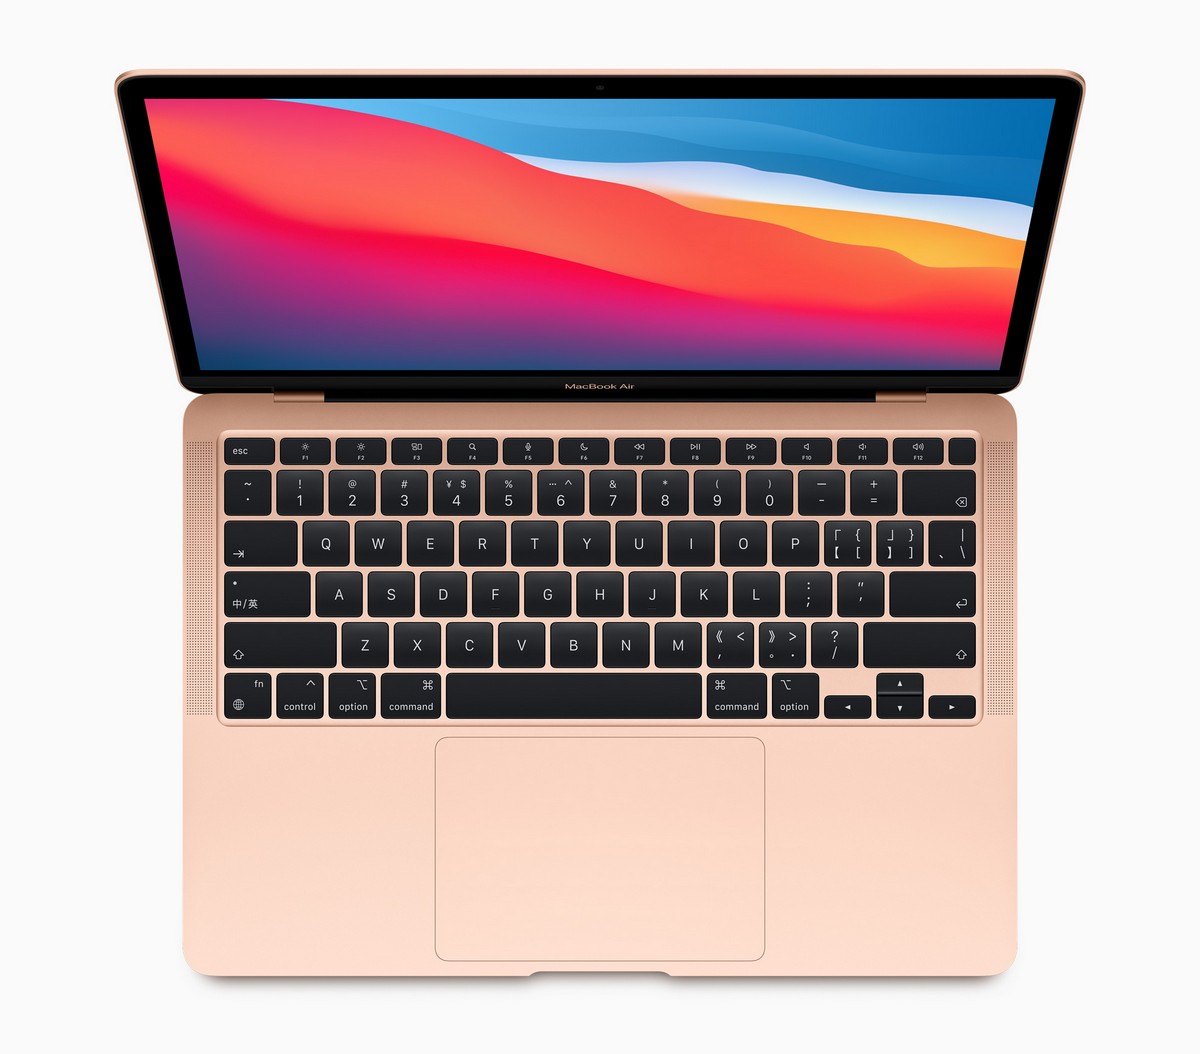 MacBook Air 15インチ 本体 M1 (2020) 8GB/256GB